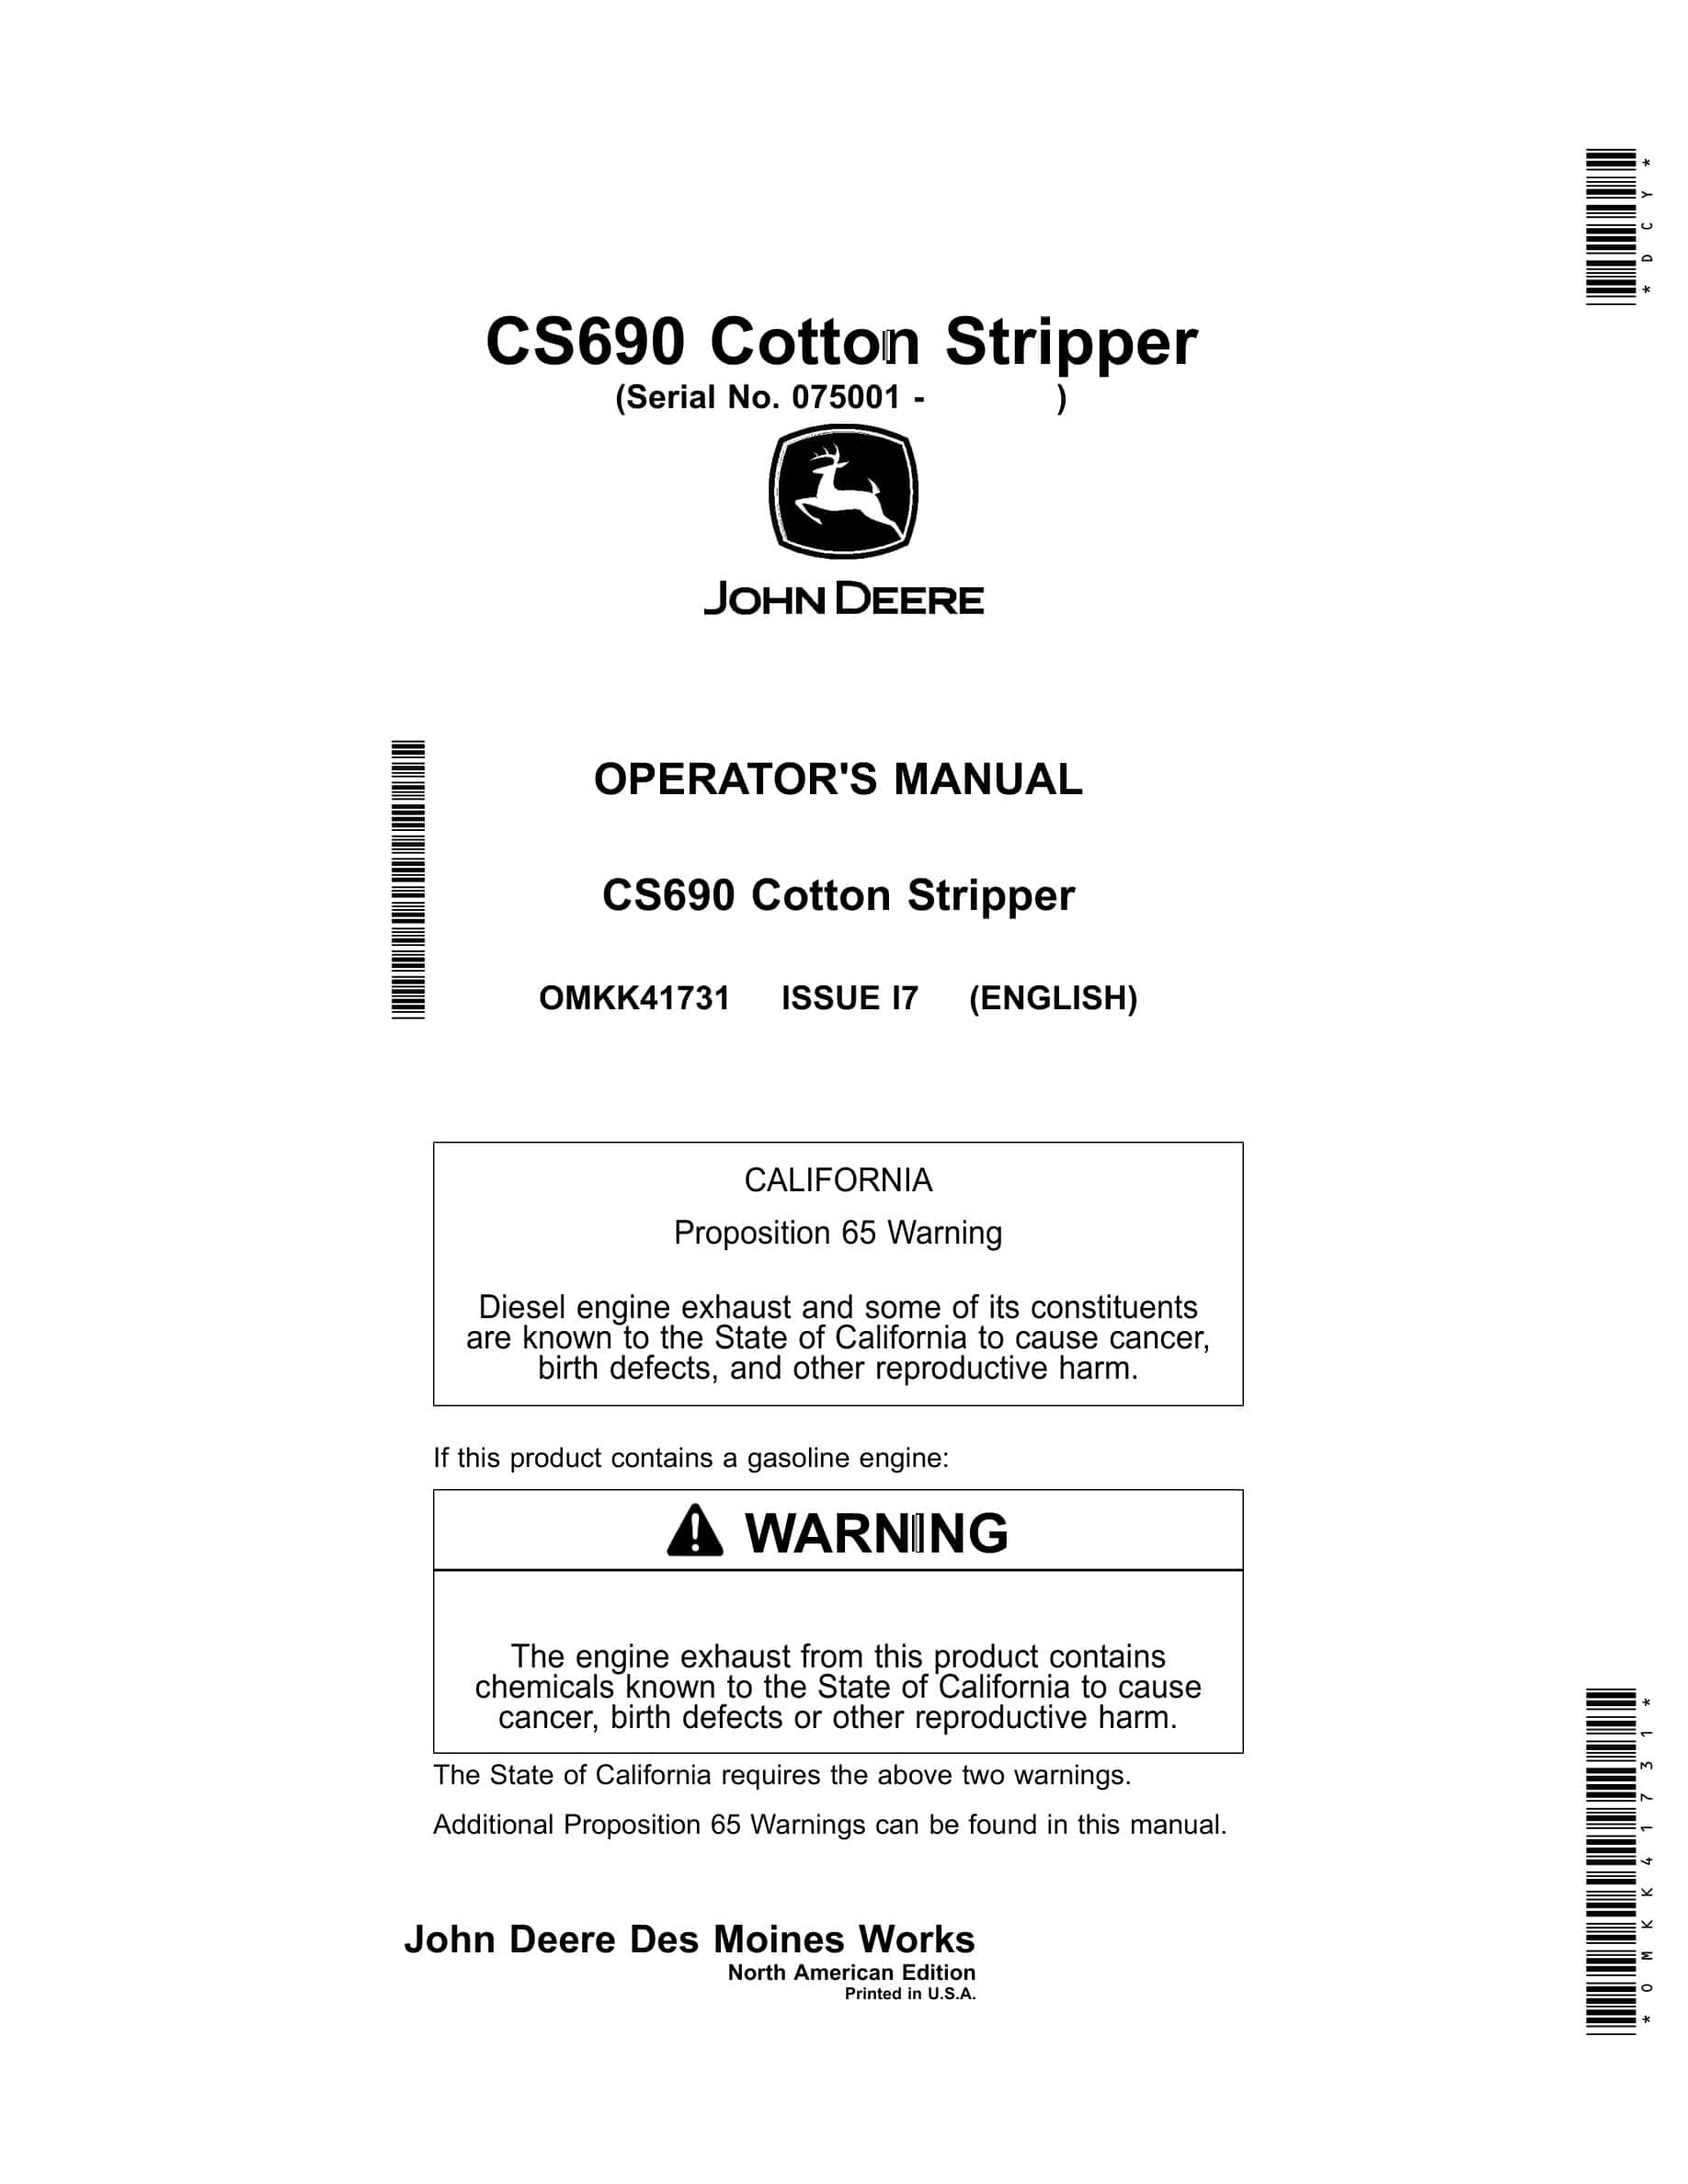 John Deere CS690 Cotton Stripper Operator Manual OMKK41731-1